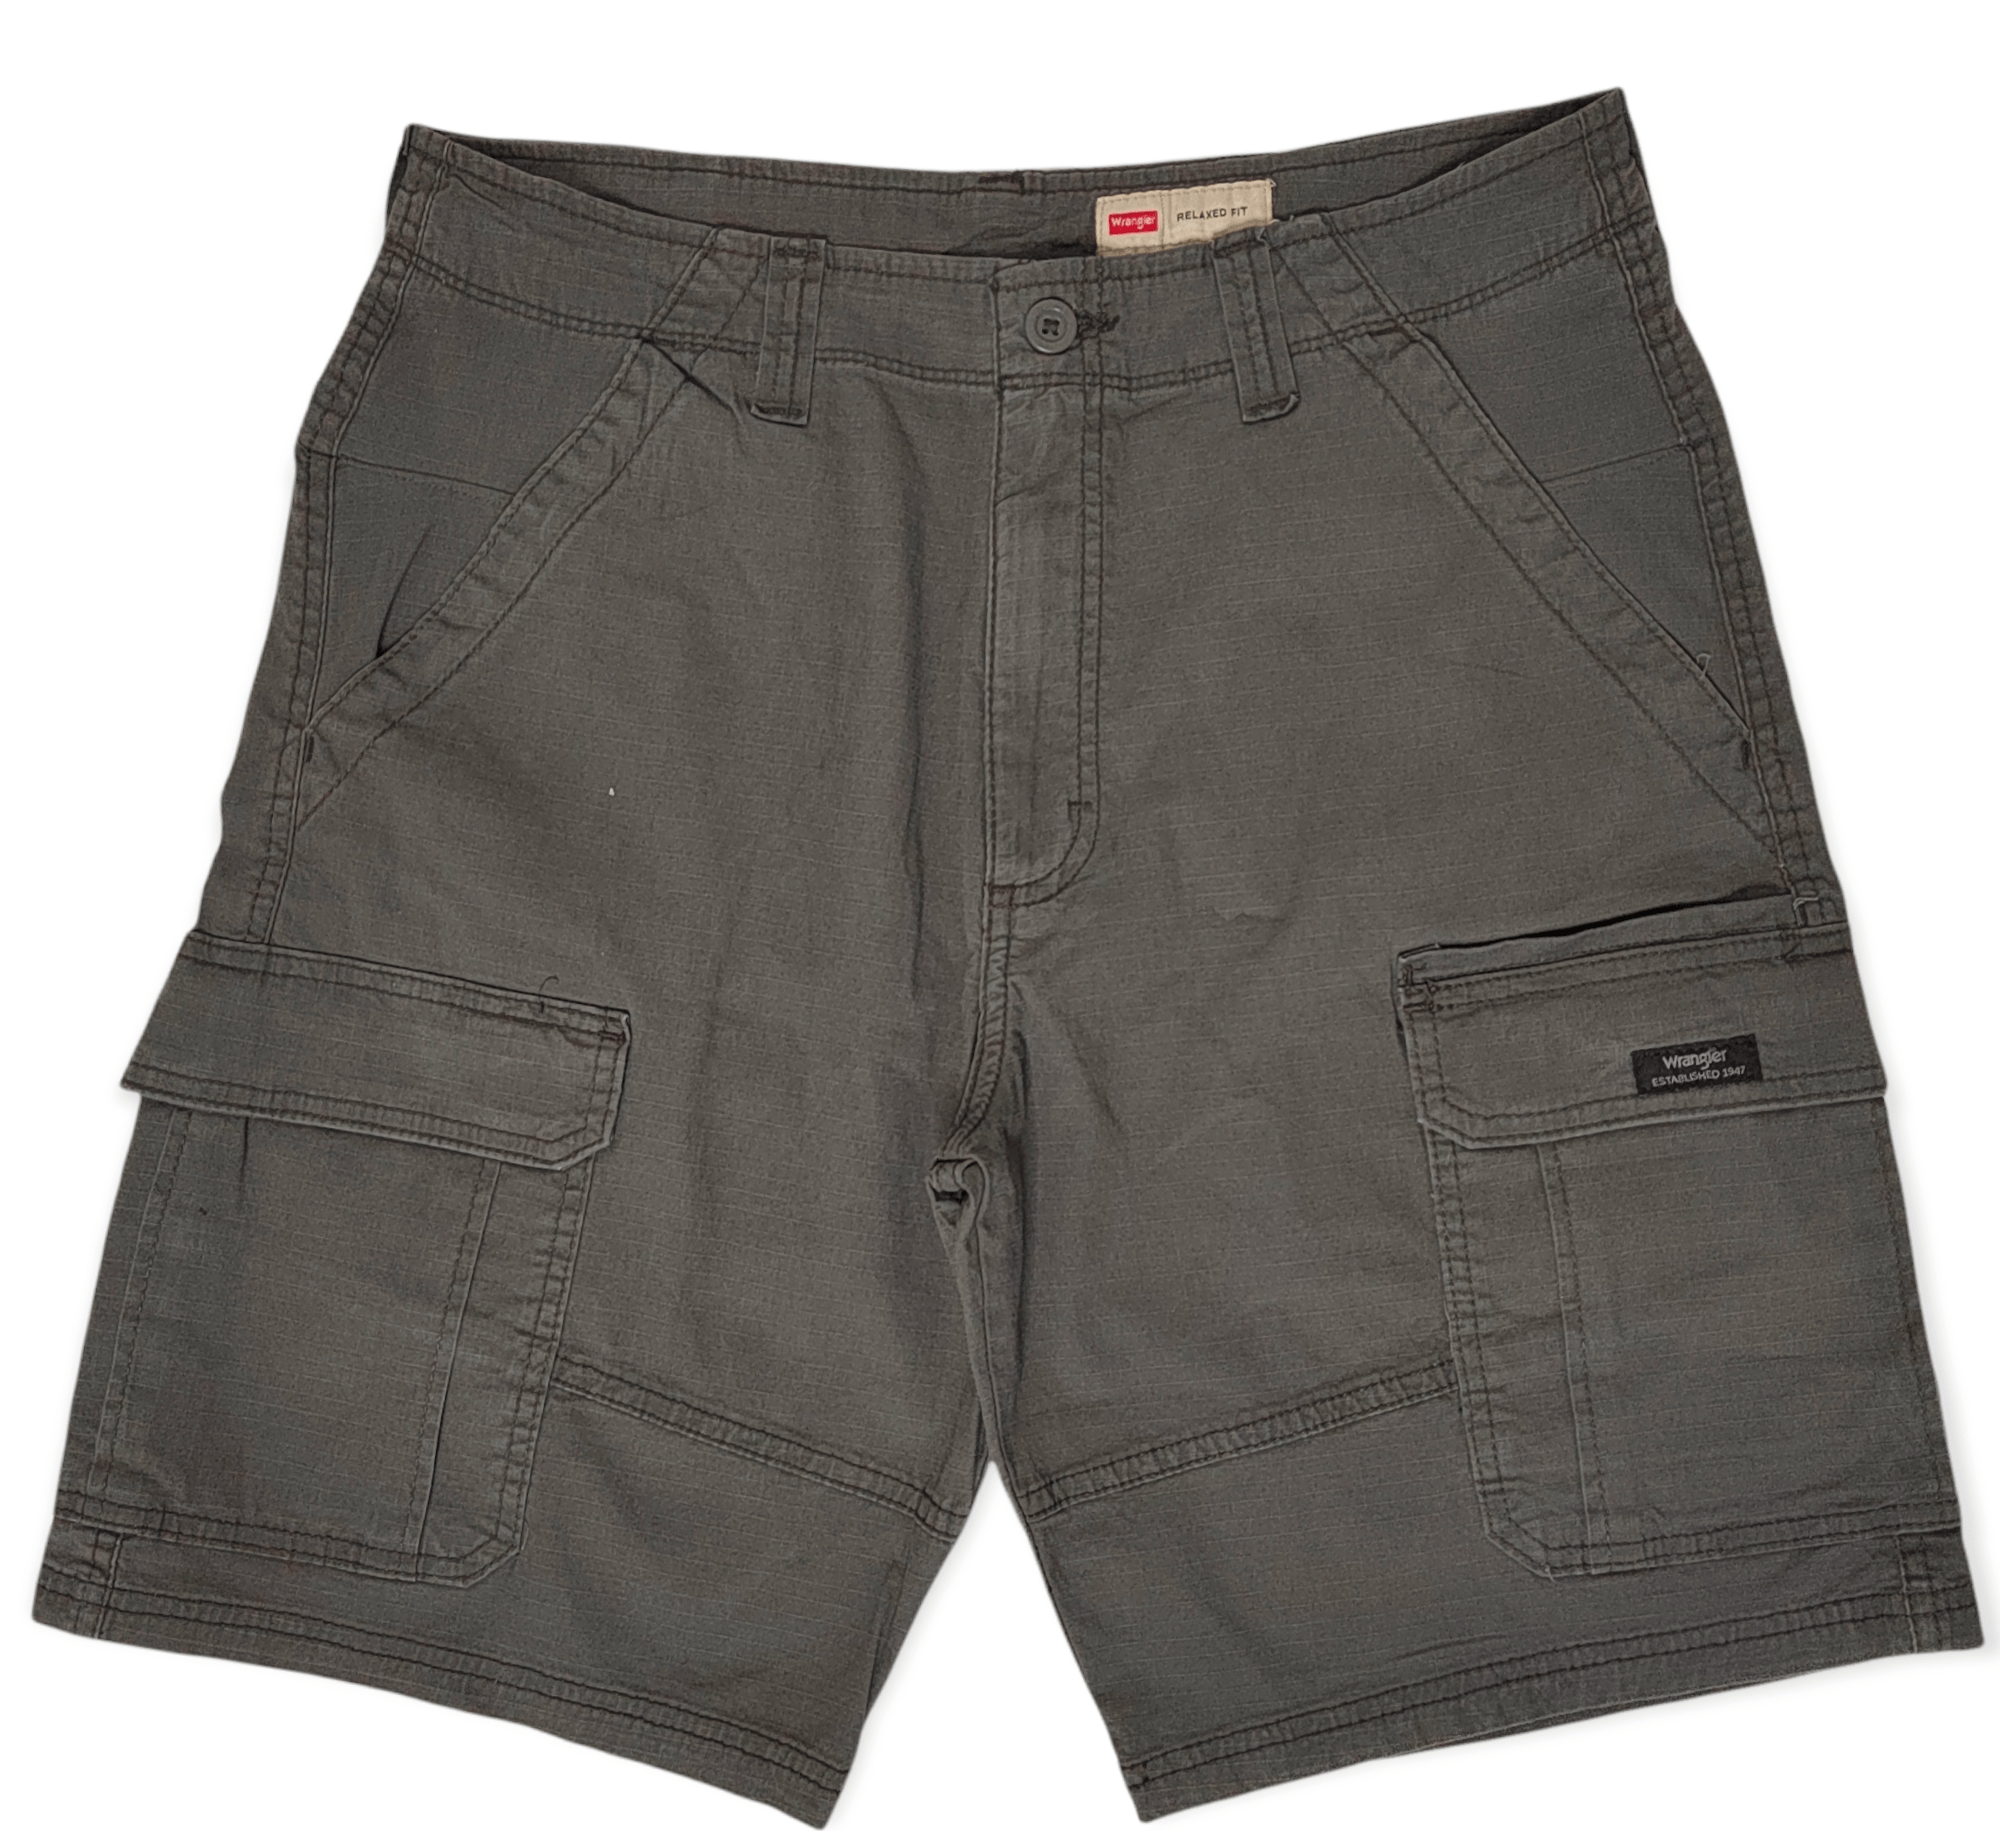 ElOutlet - Men Summer Men Shorts Men Cargo Shorts - Grey